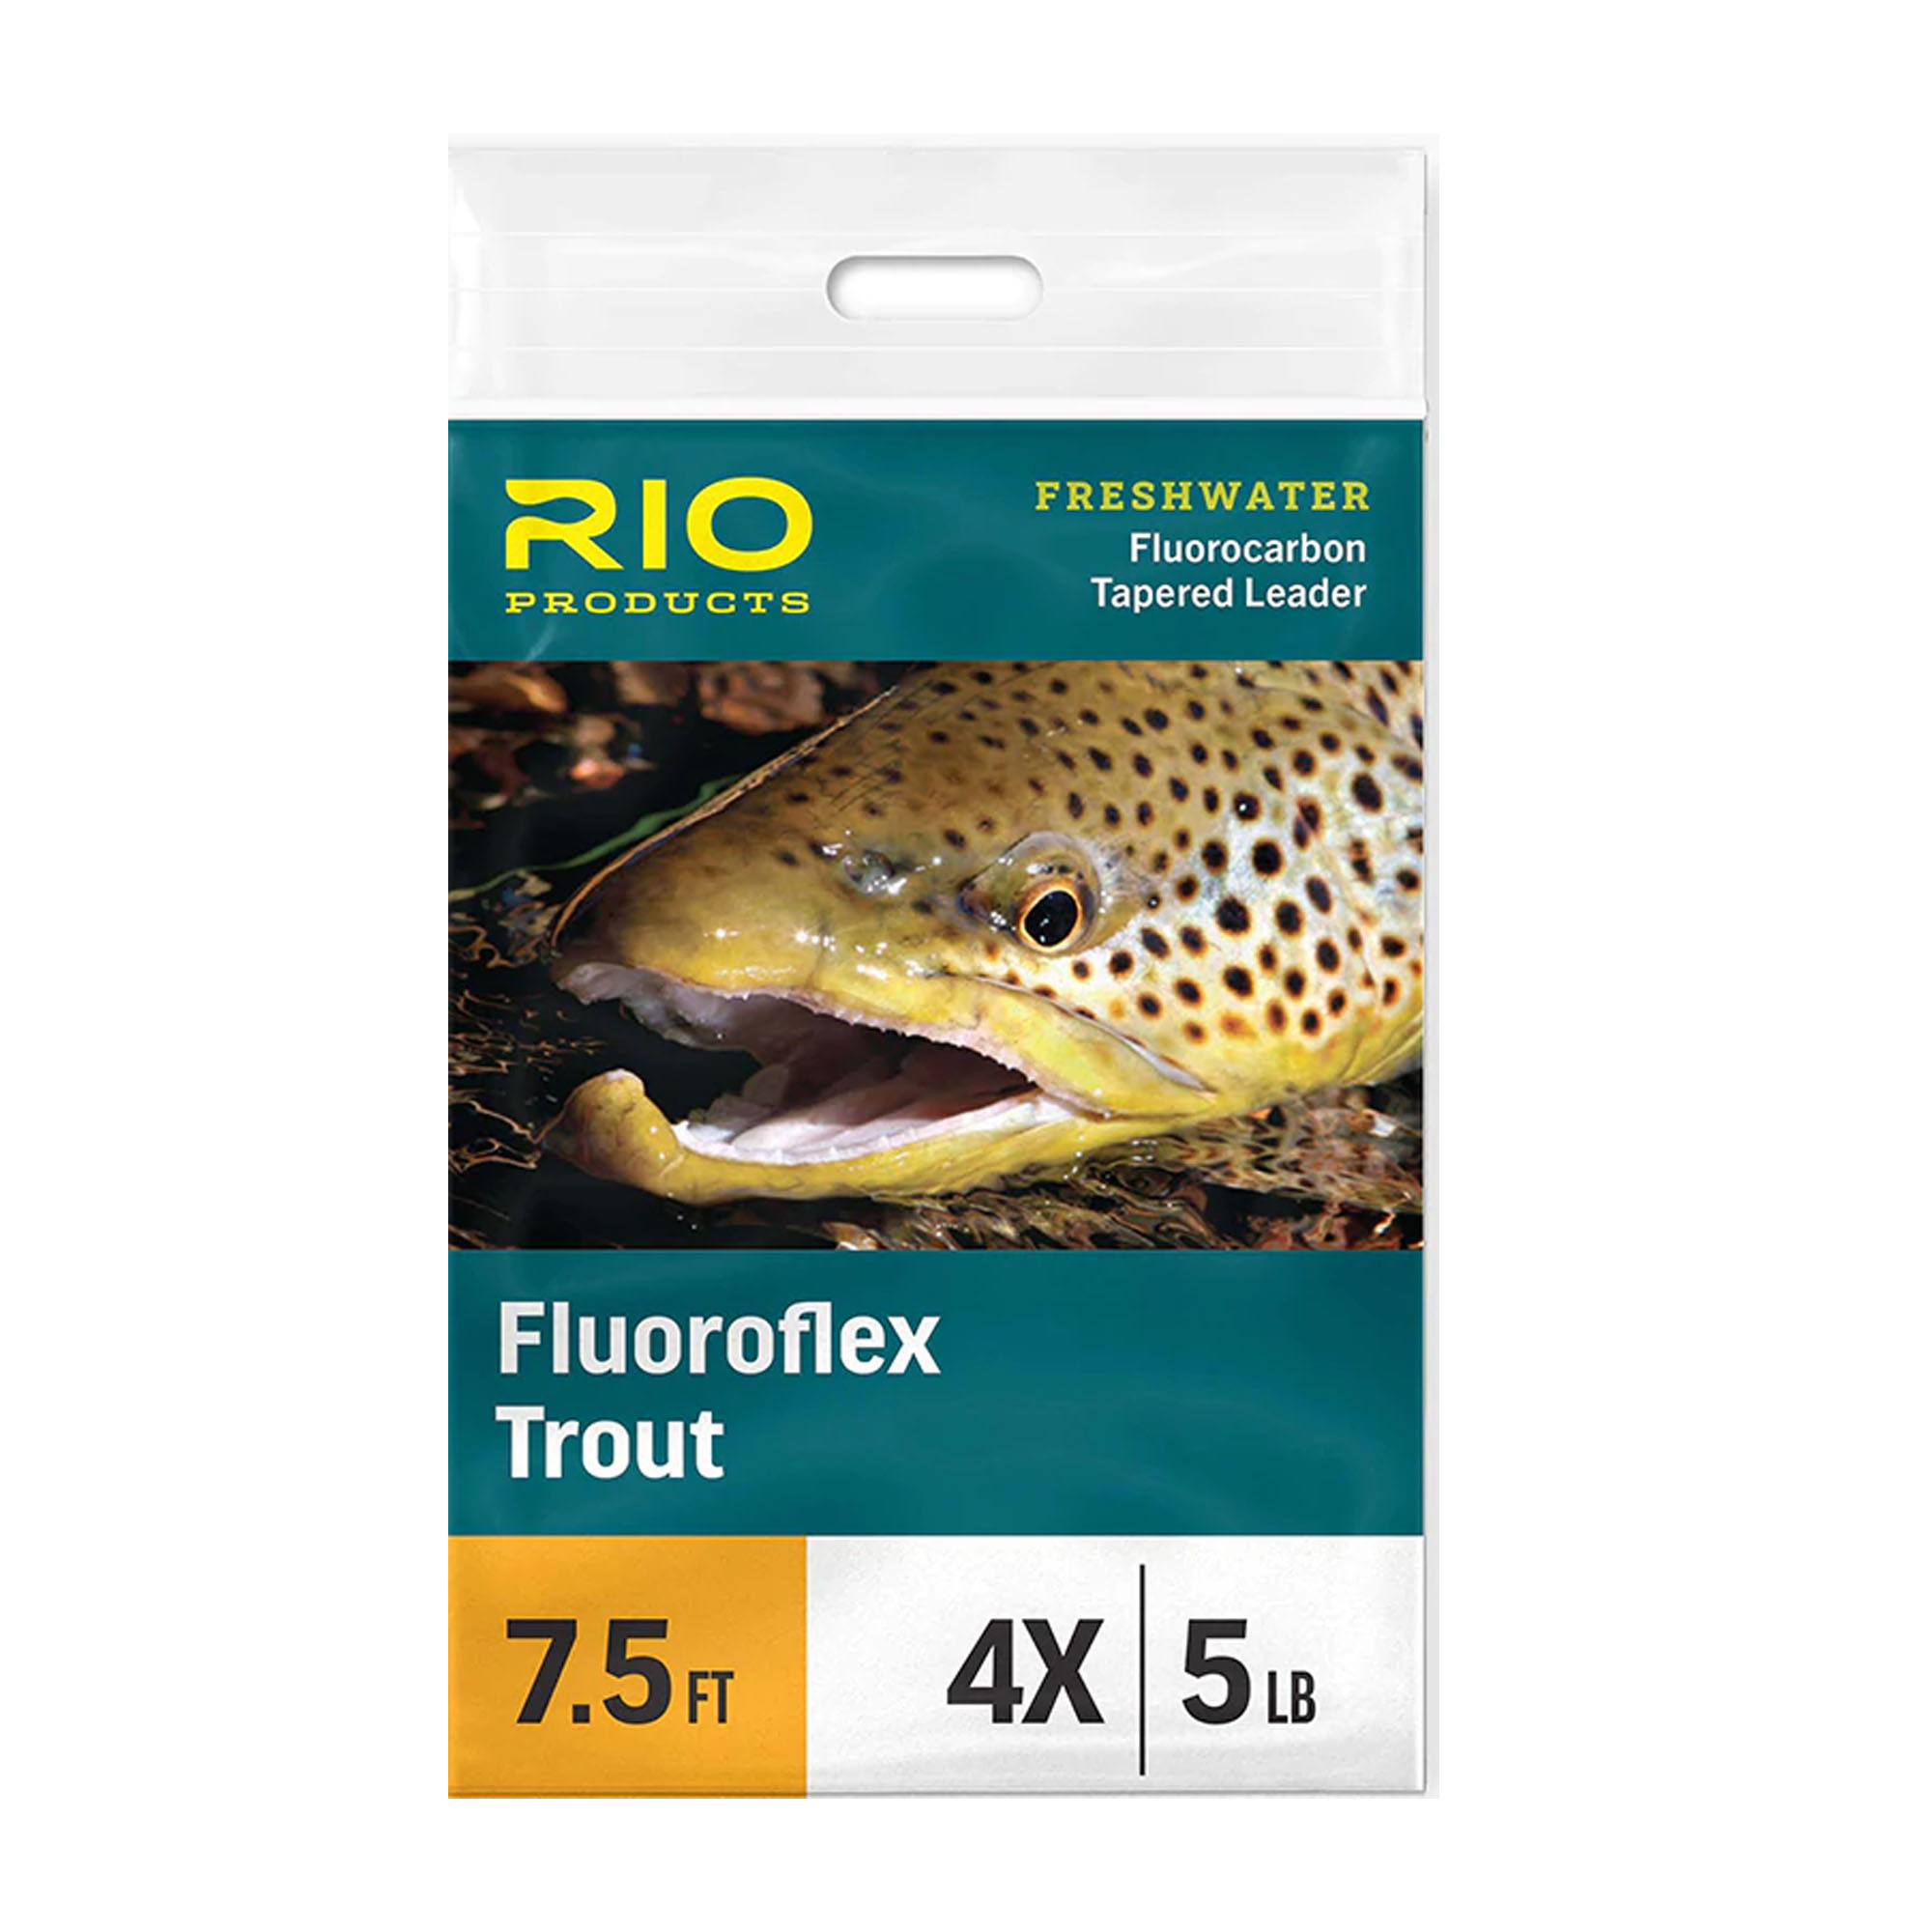 RIO Fluoroflex Trout Leaders – Guide Flyfishing